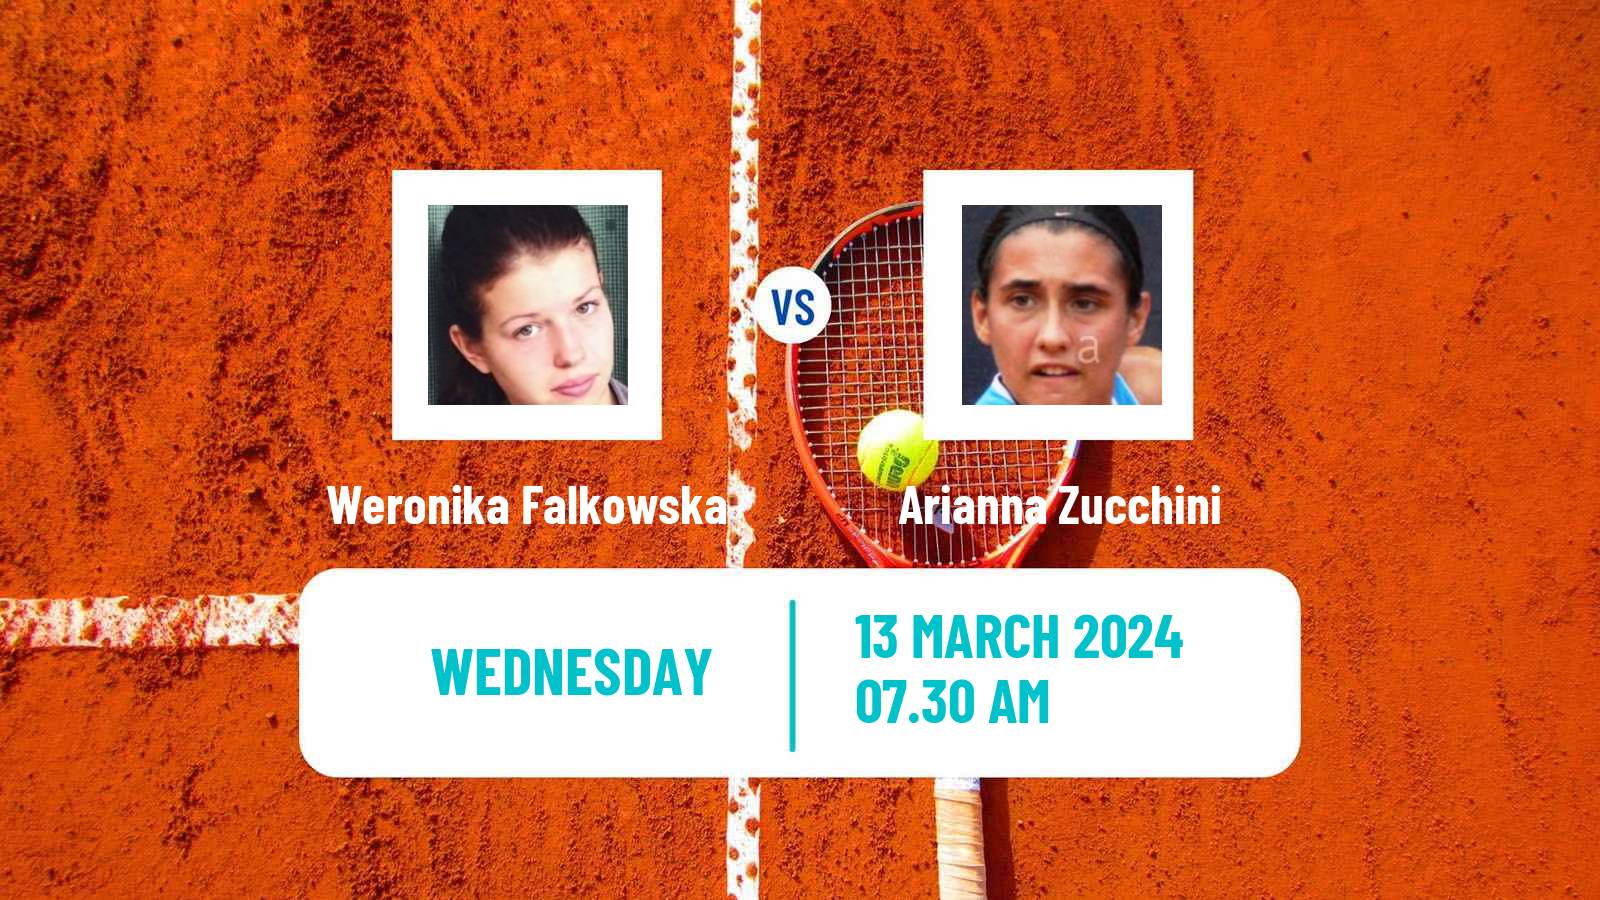 Tennis ITF W35 Solarino 2 Women Weronika Falkowska - Arianna Zucchini